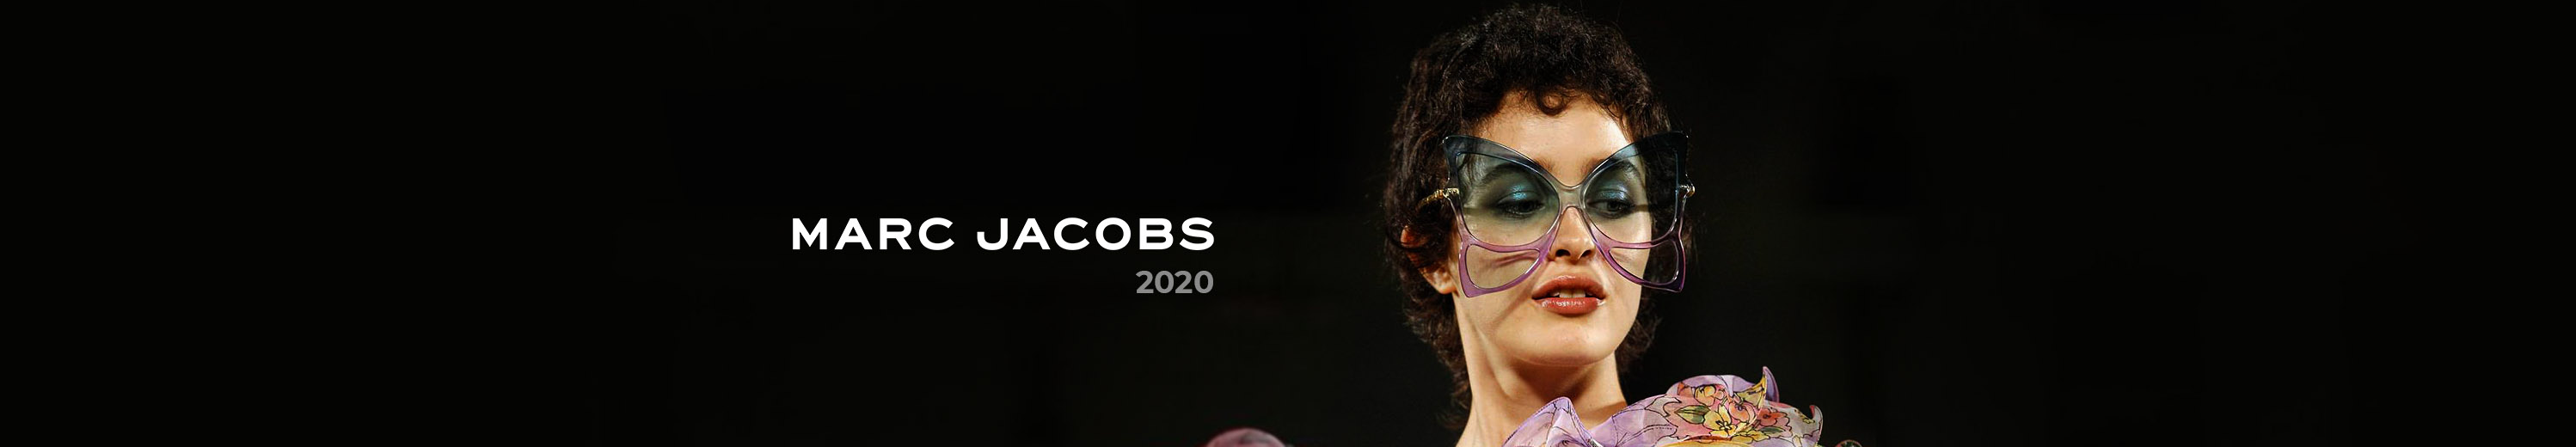 Marc Jacobs 2020 Eyewear Collection